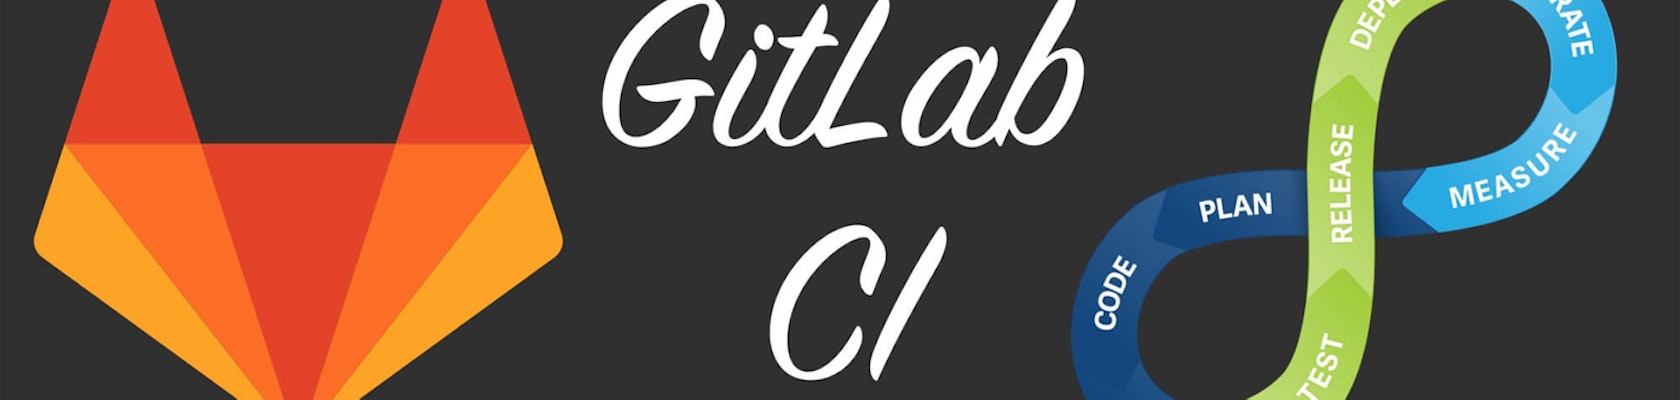 Git Lab CI Hero Image